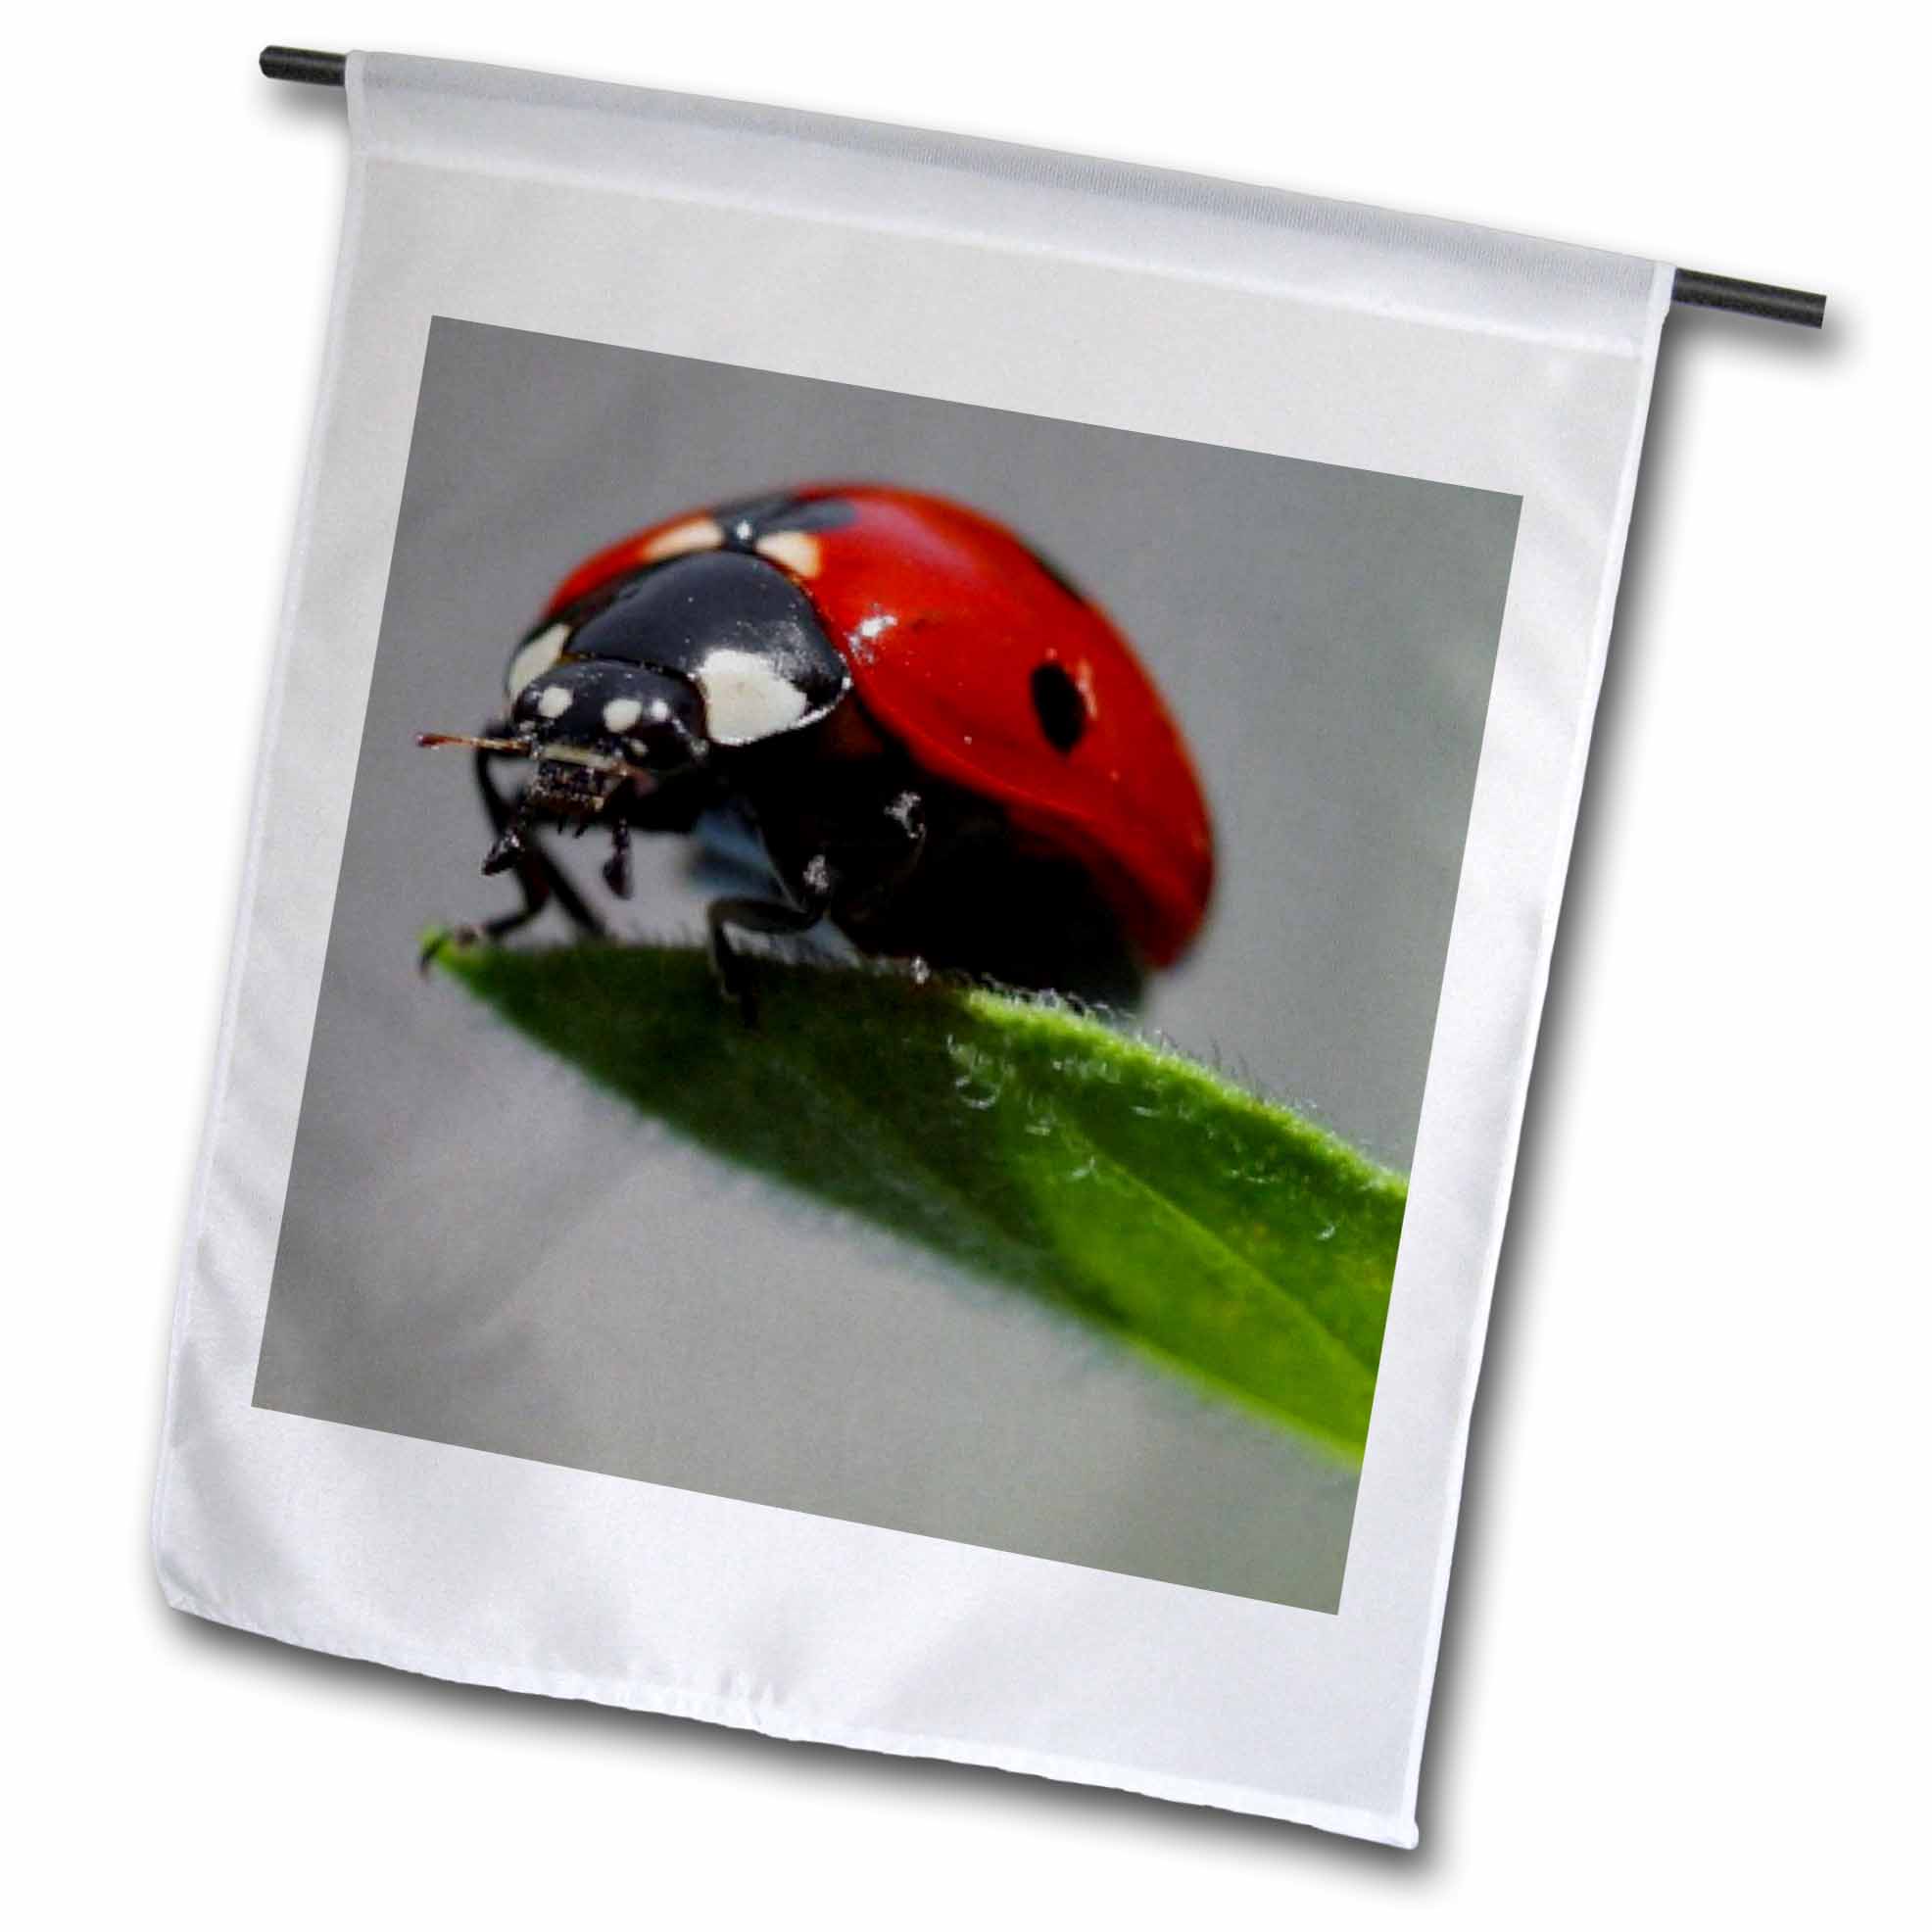 3dRose The Ladybug - ladybug, macro, beetle, bug, insect, lady cow, lady fly - Garden Flag, 12 by 18-inch - image 1 of 1